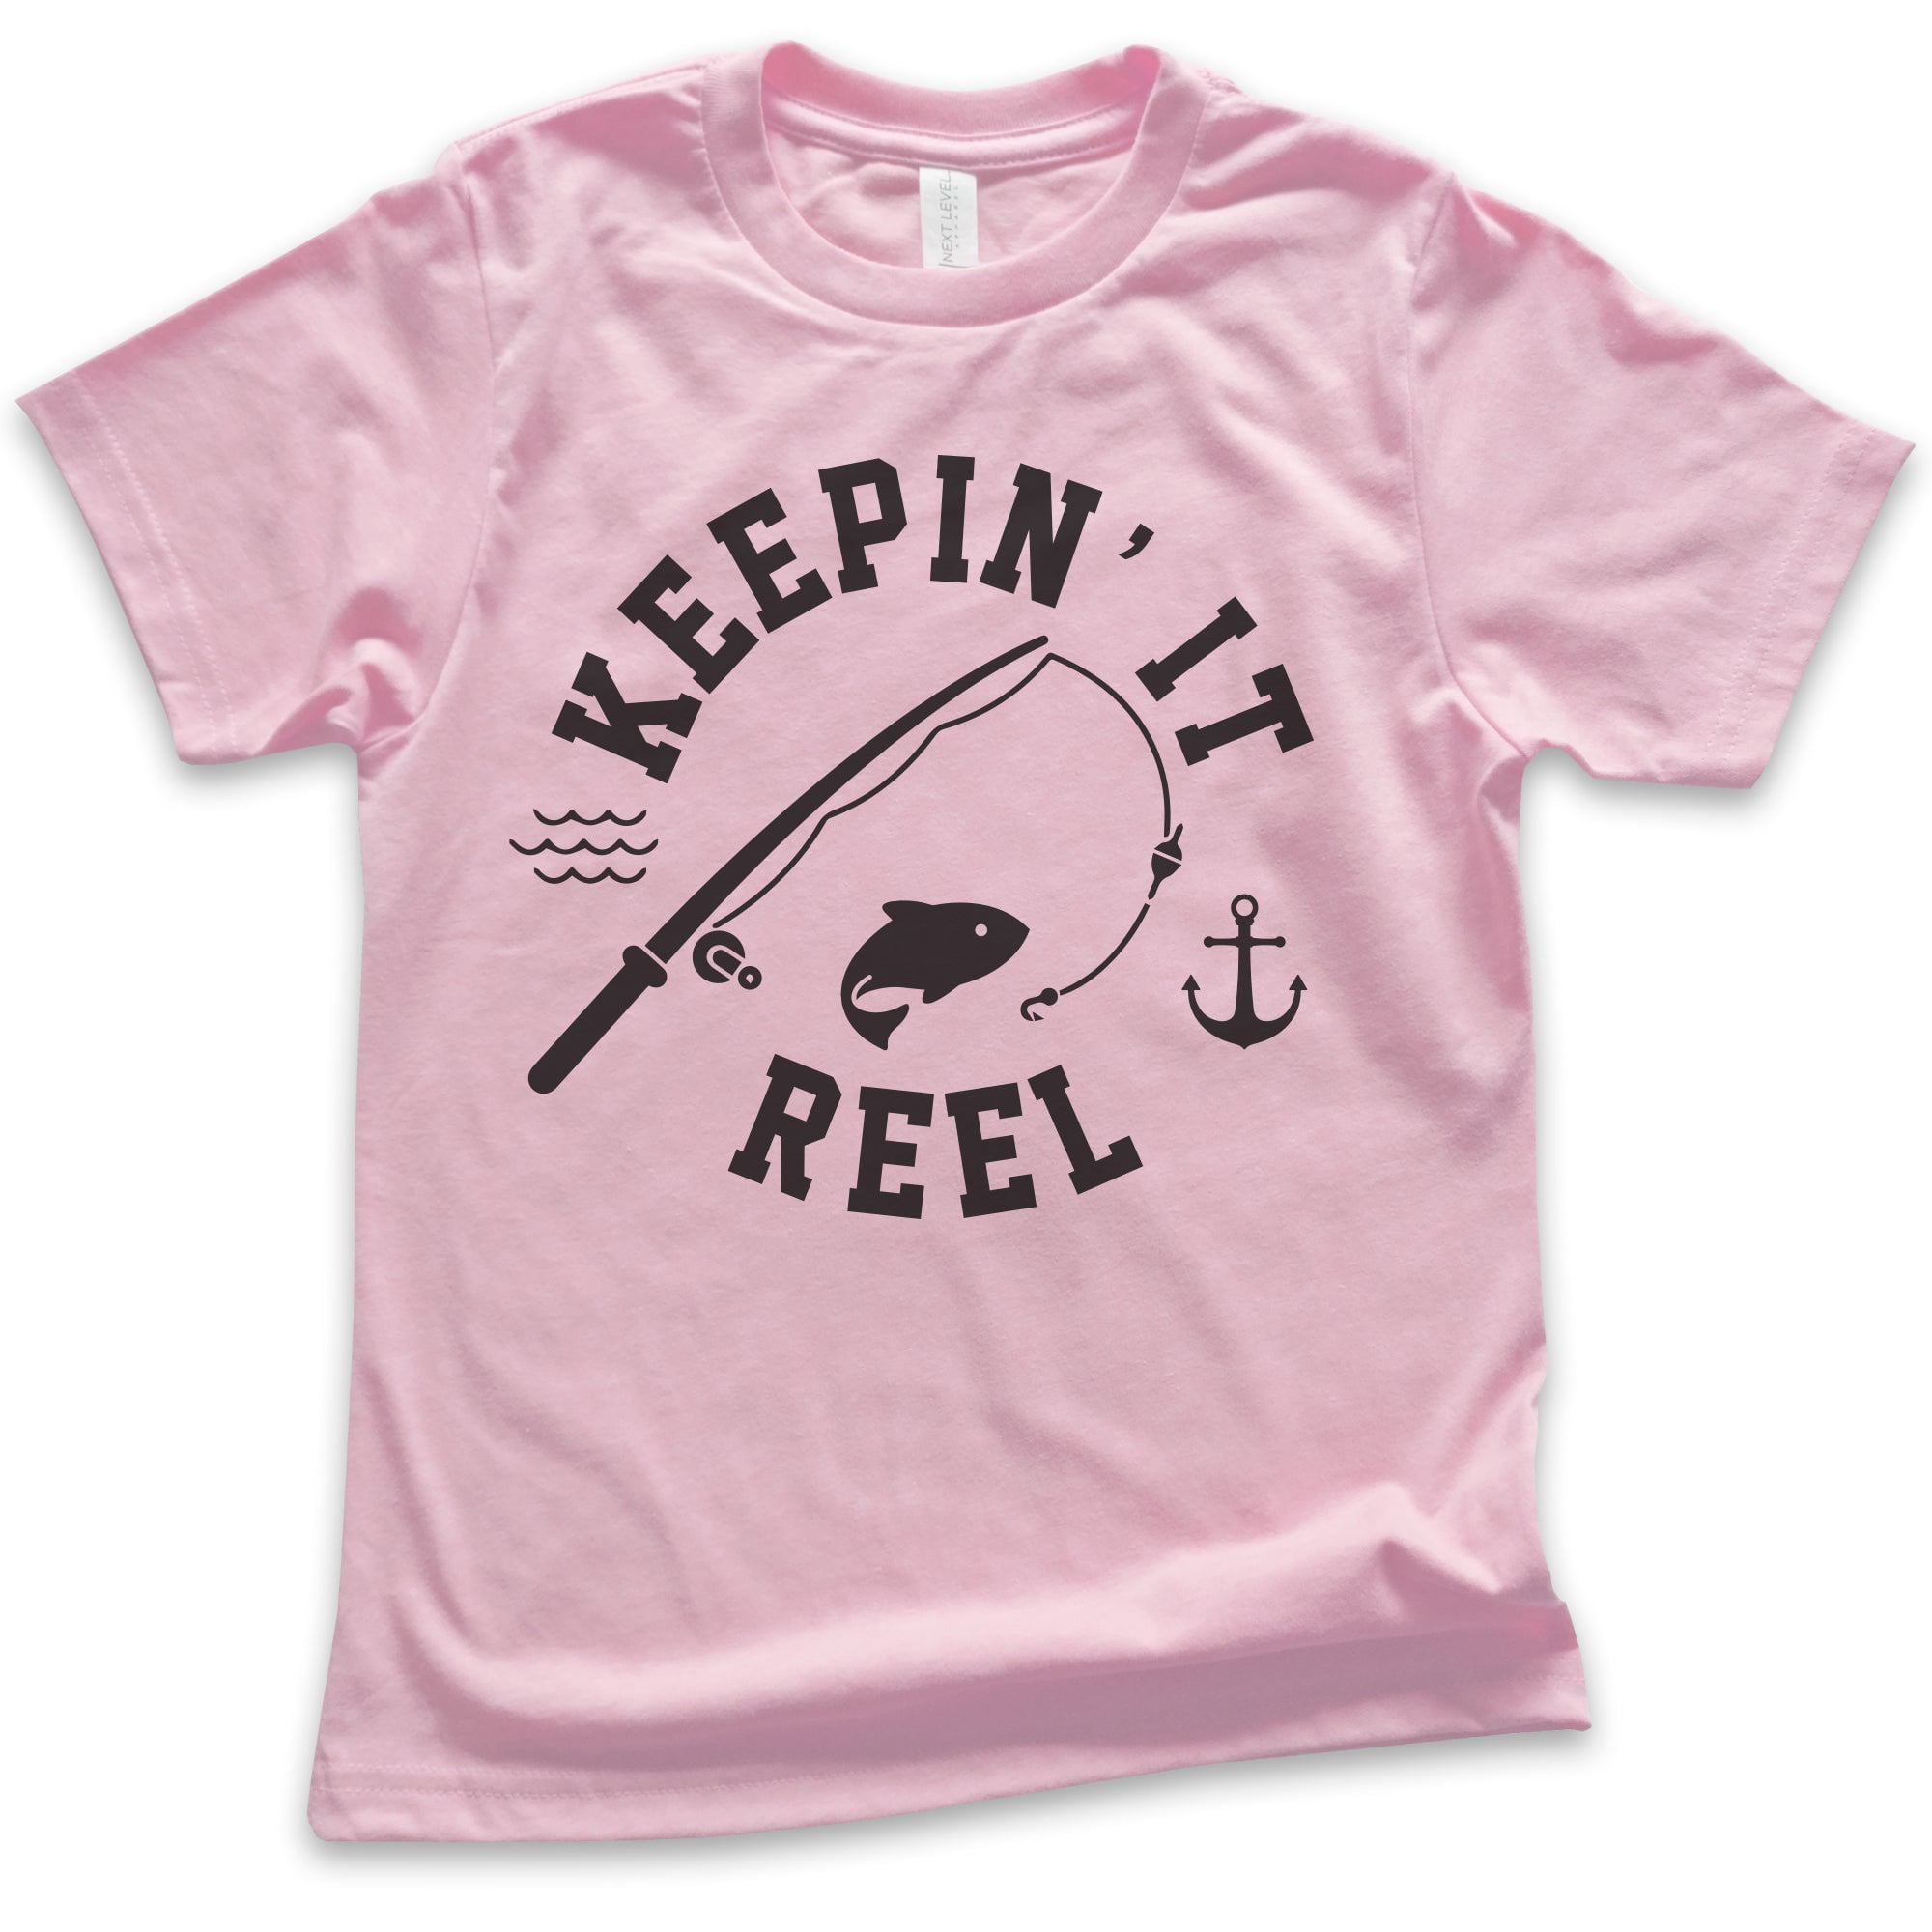 Kids Keepin' It Reel Shirt, Youth Kids Boy Girl T-Shirt, Fishing Shirt,  Fish Pun Shirt, Dark Heather Gray, Small 